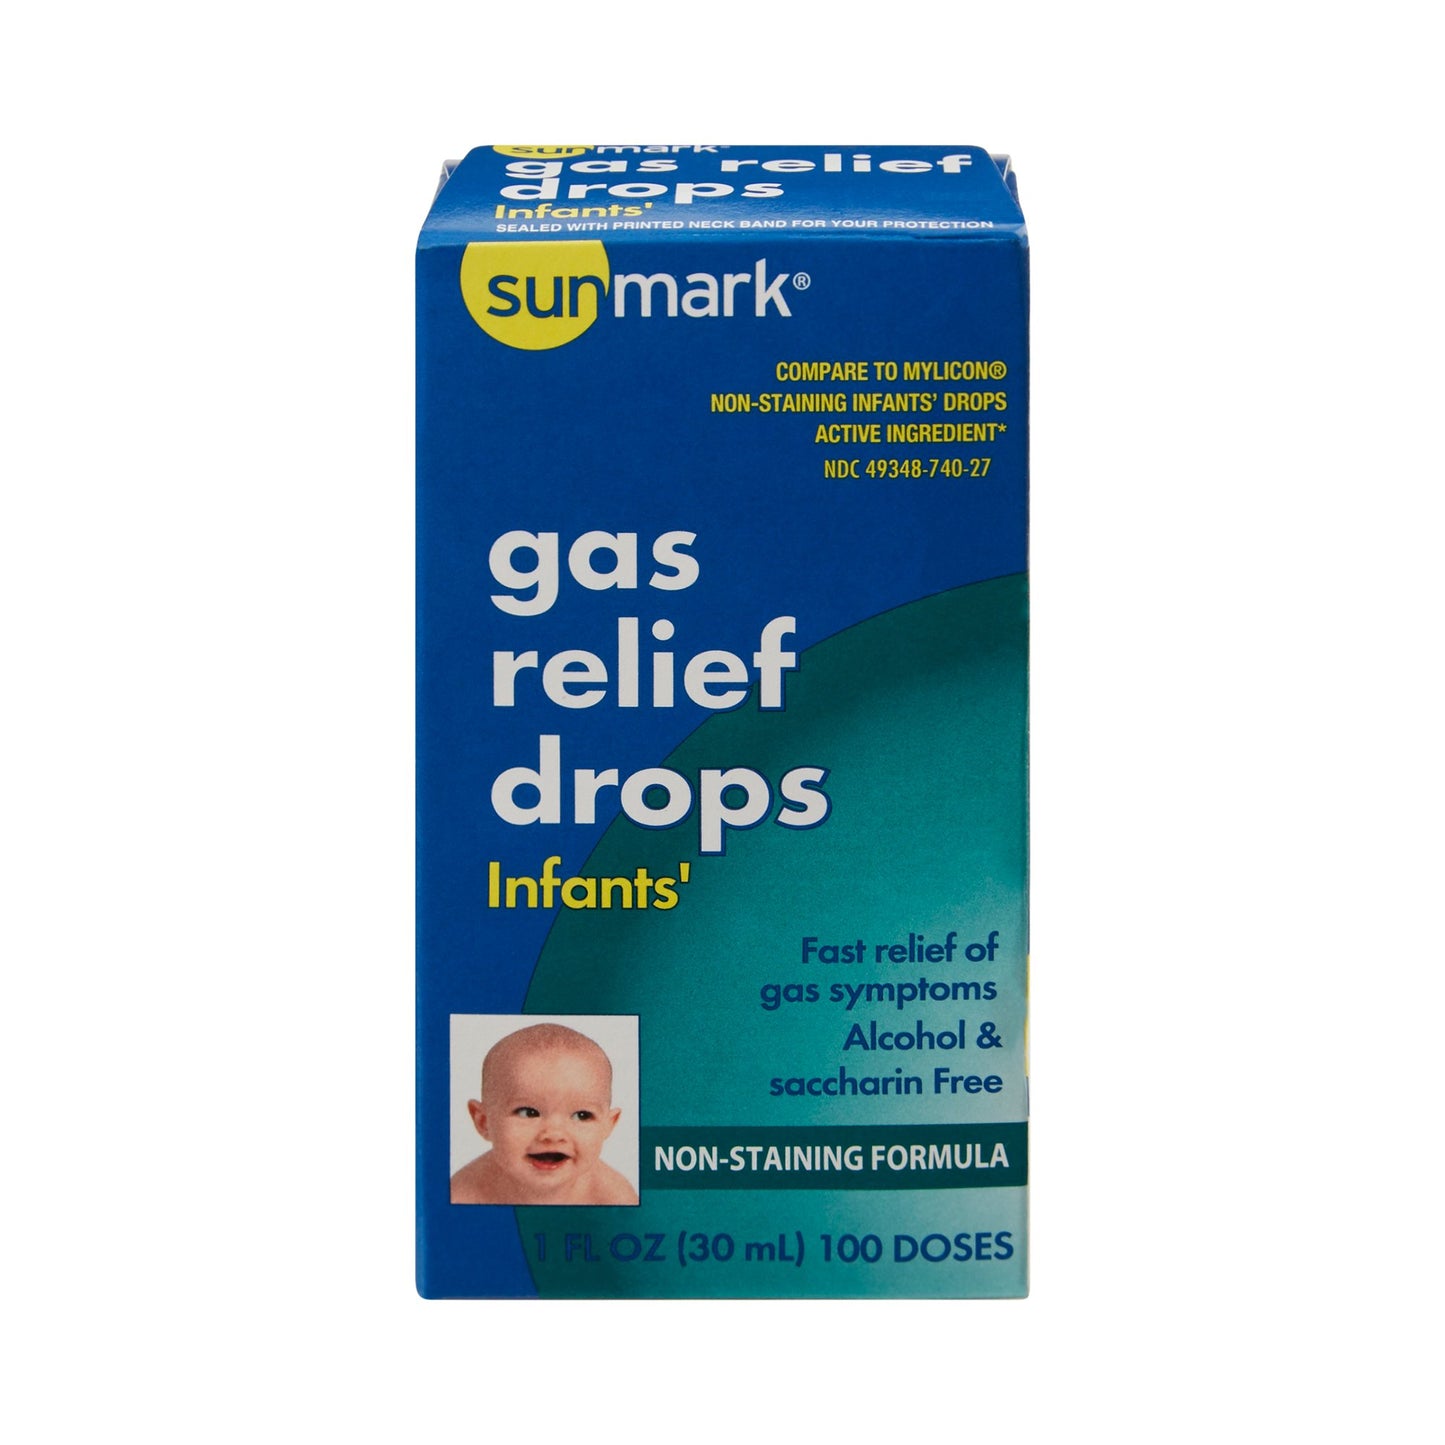 Sunmark® Simethicone Infant Gas Relief, 1 oz. Dropper Bottle